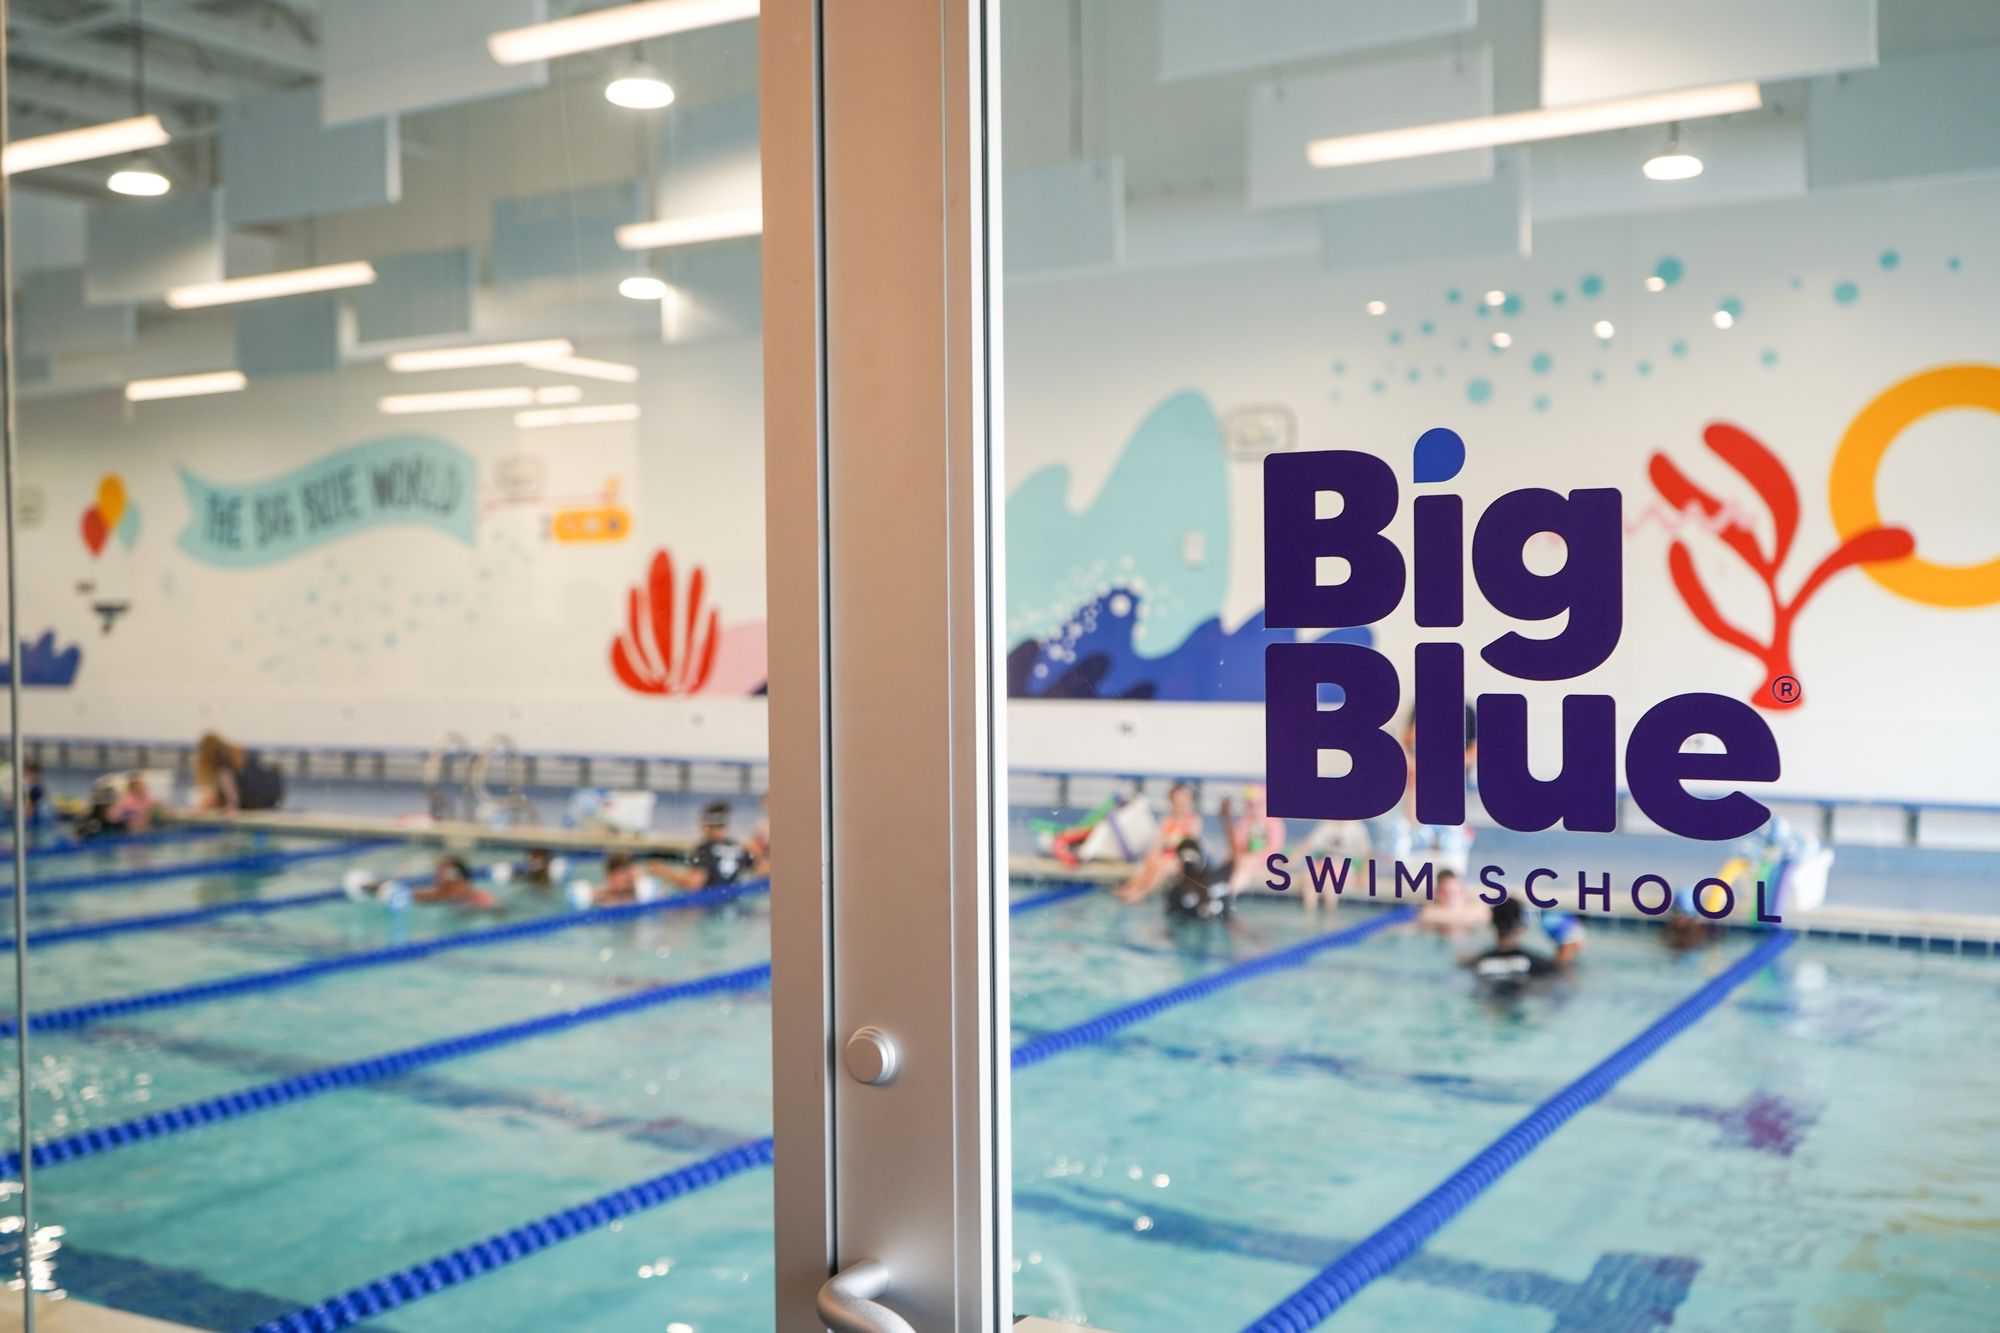 Big Blue Swim School location